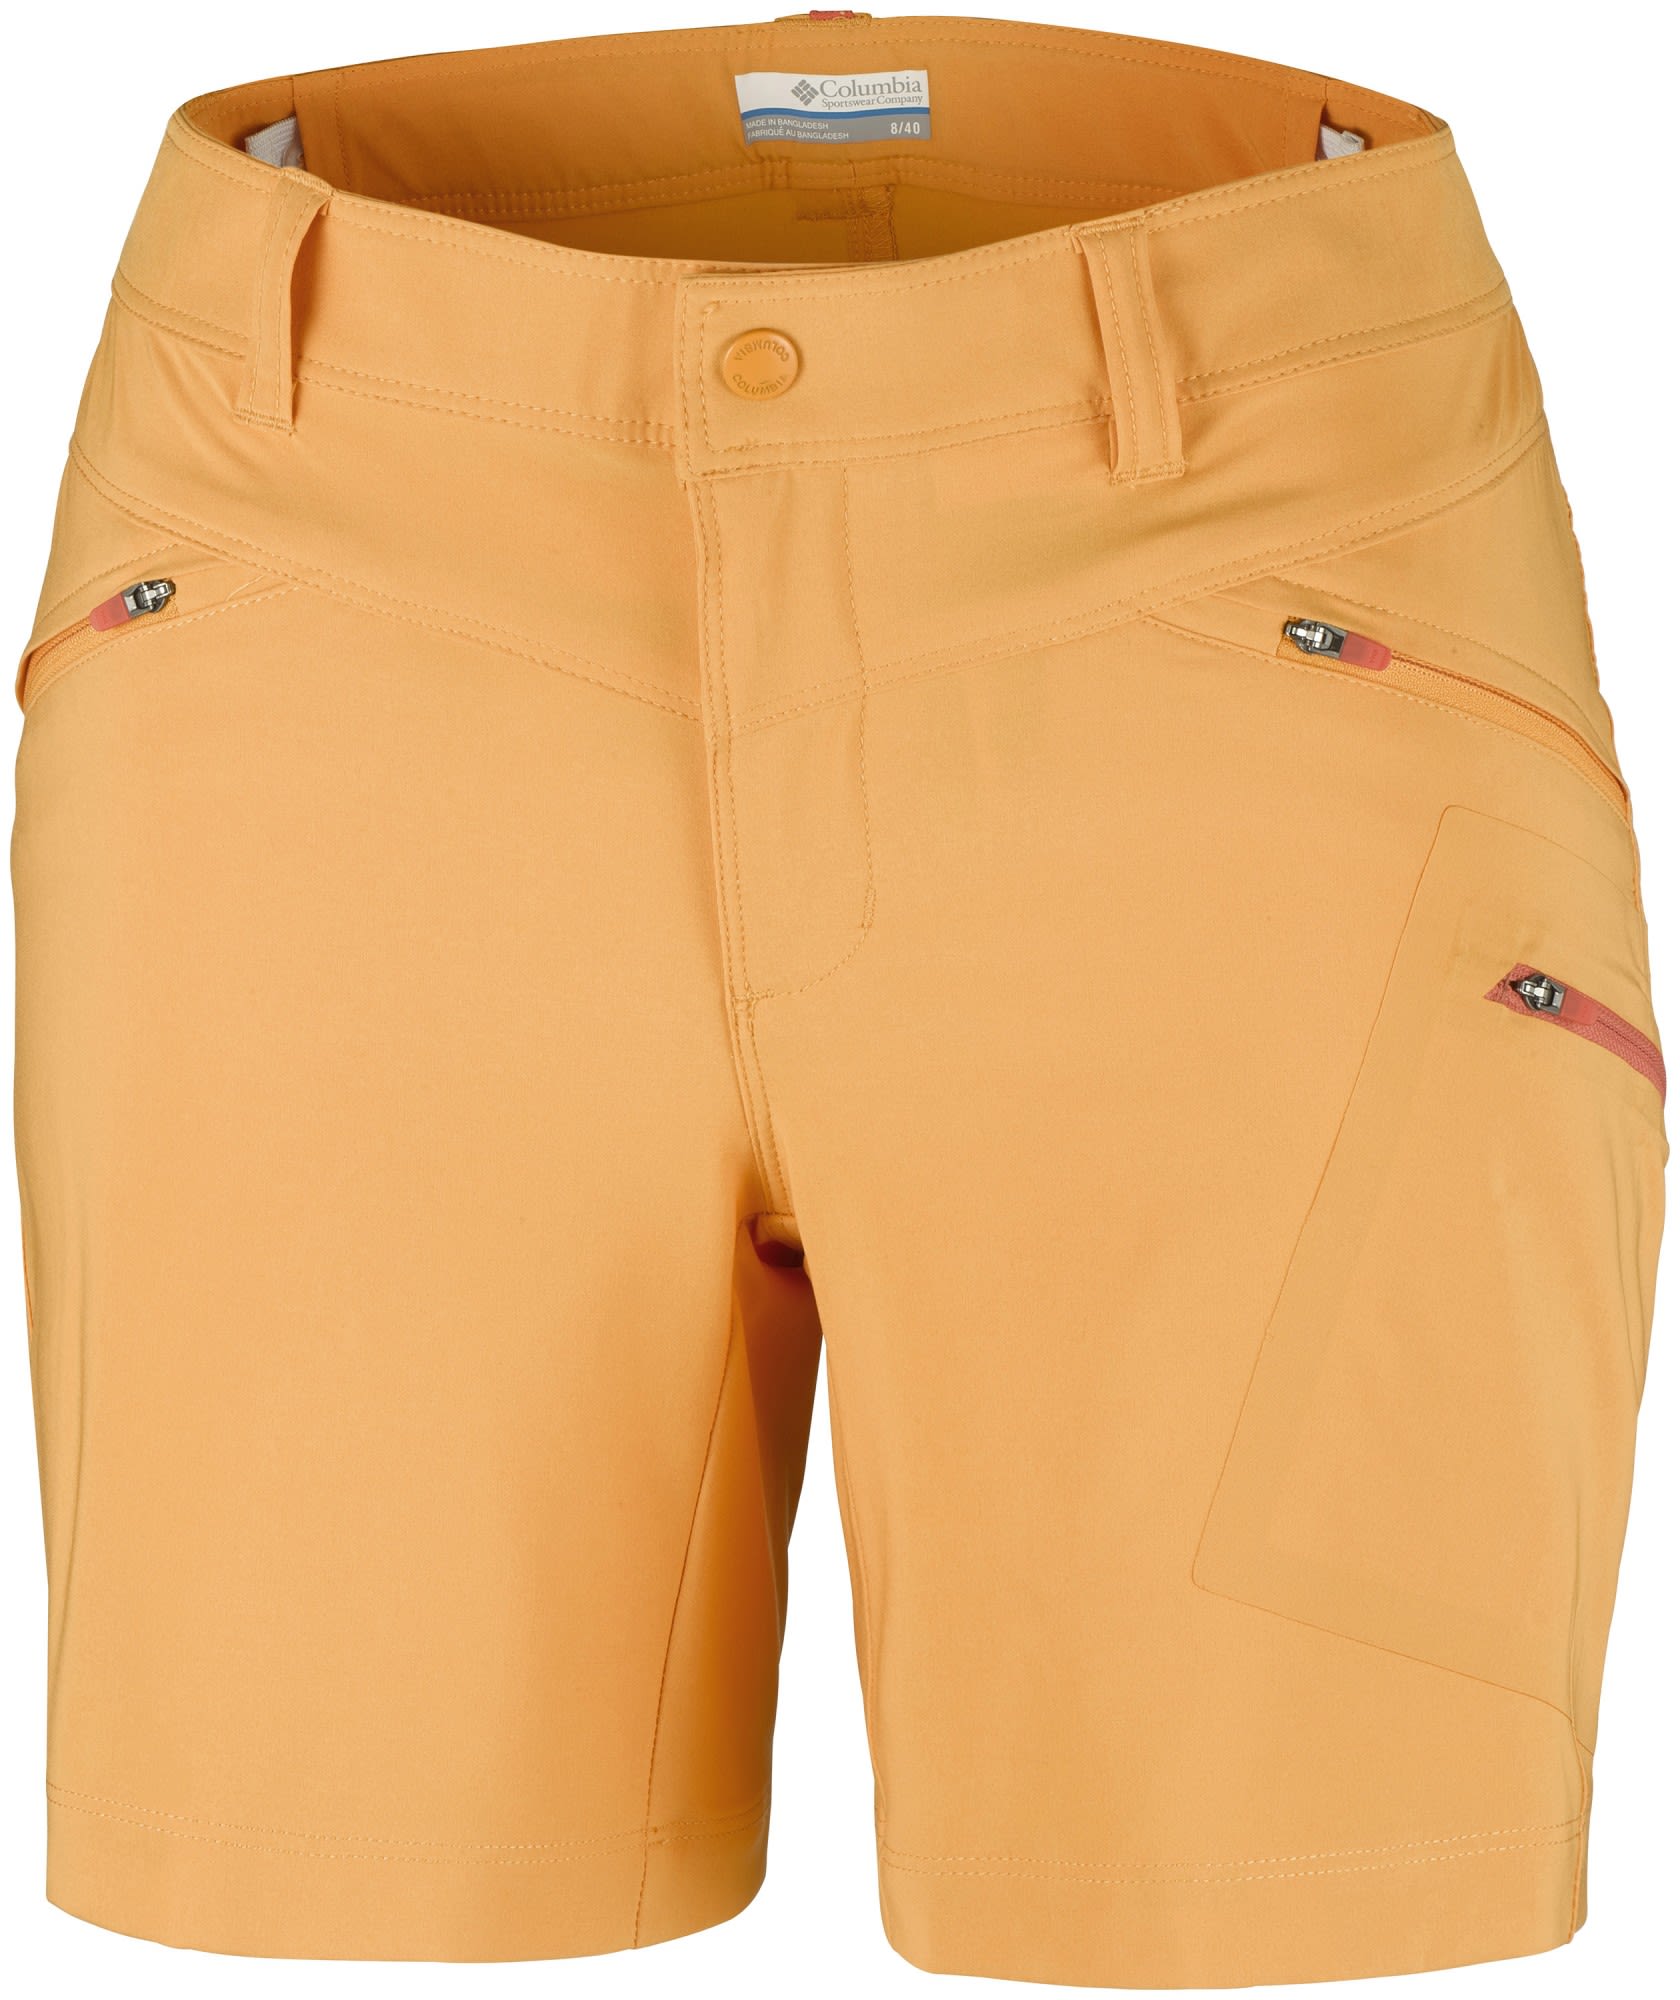 Columbia Peak TO Point Short (Vorgngermodell) Orange- Female Shorts- Grsse 4 - 8 - Farbe Summer Orange